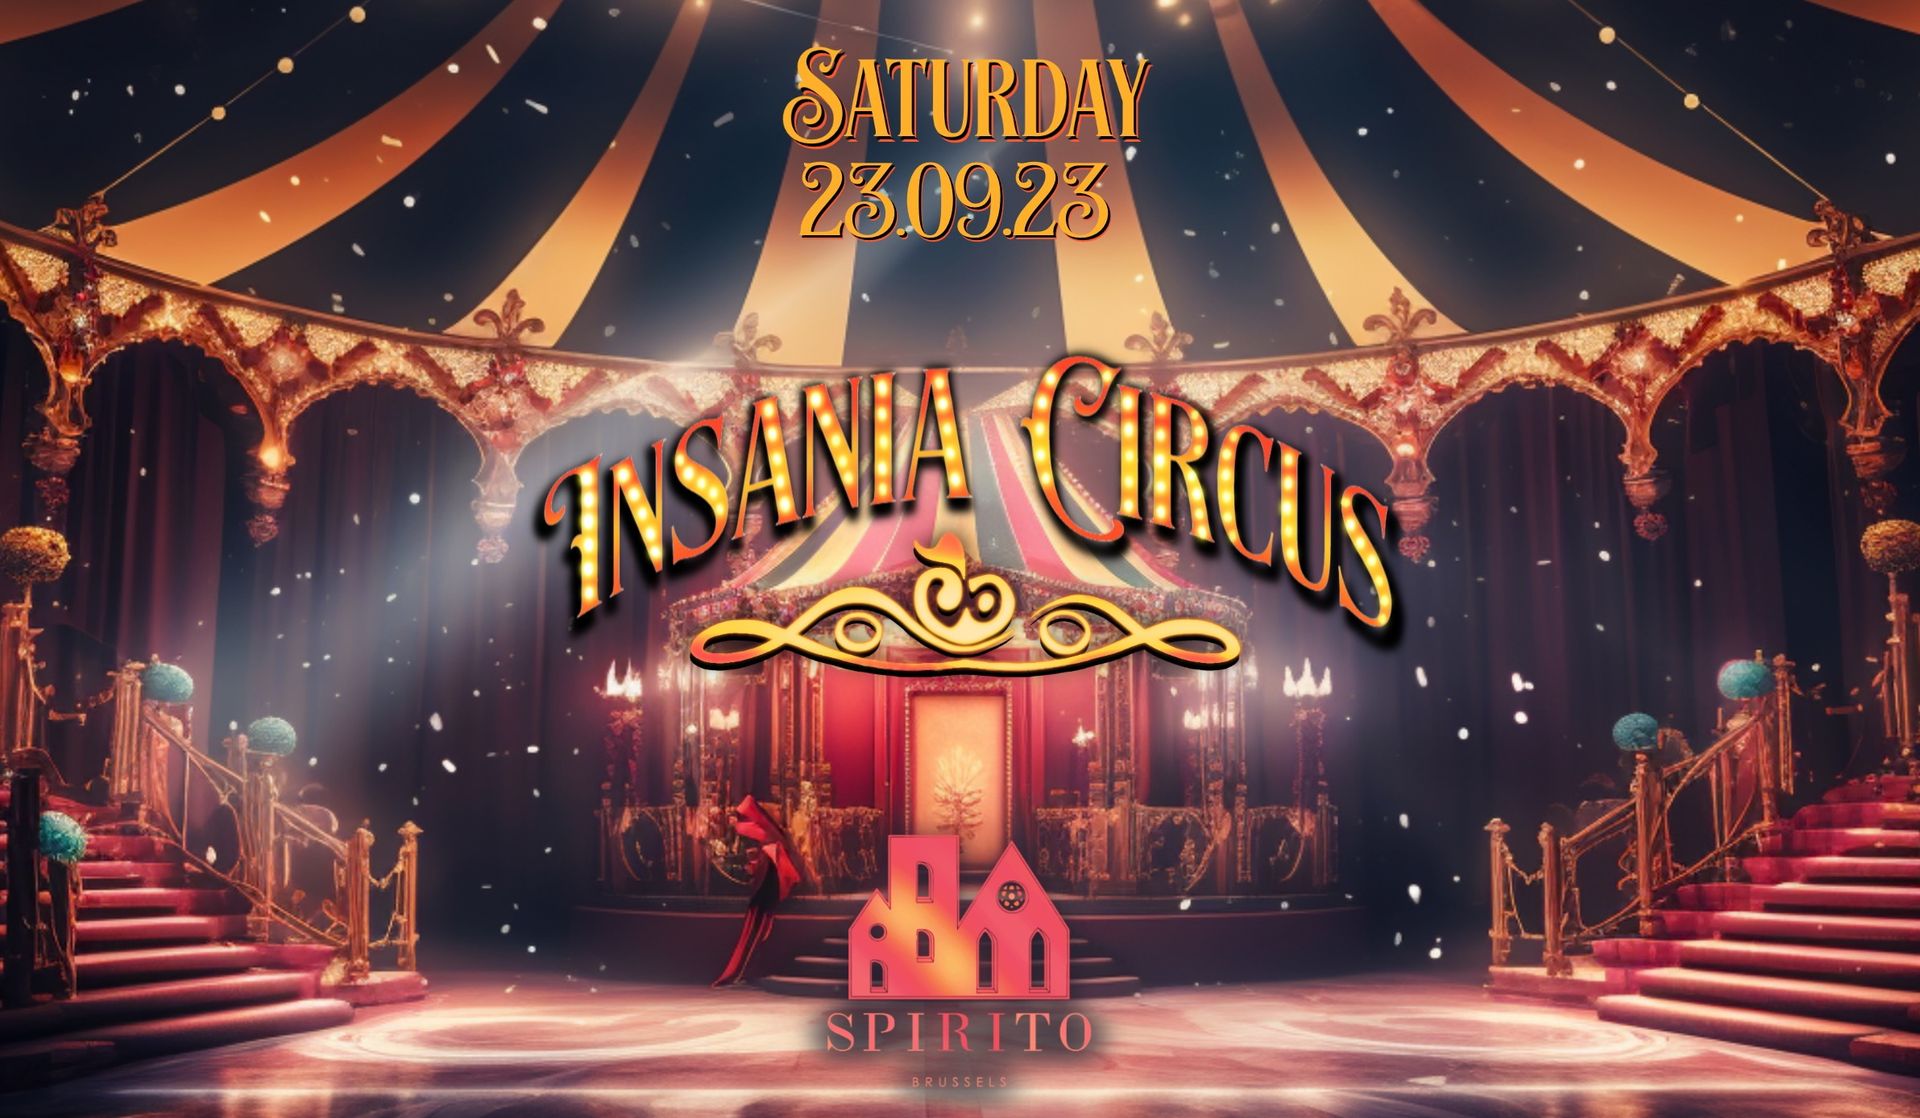 Insania Circus